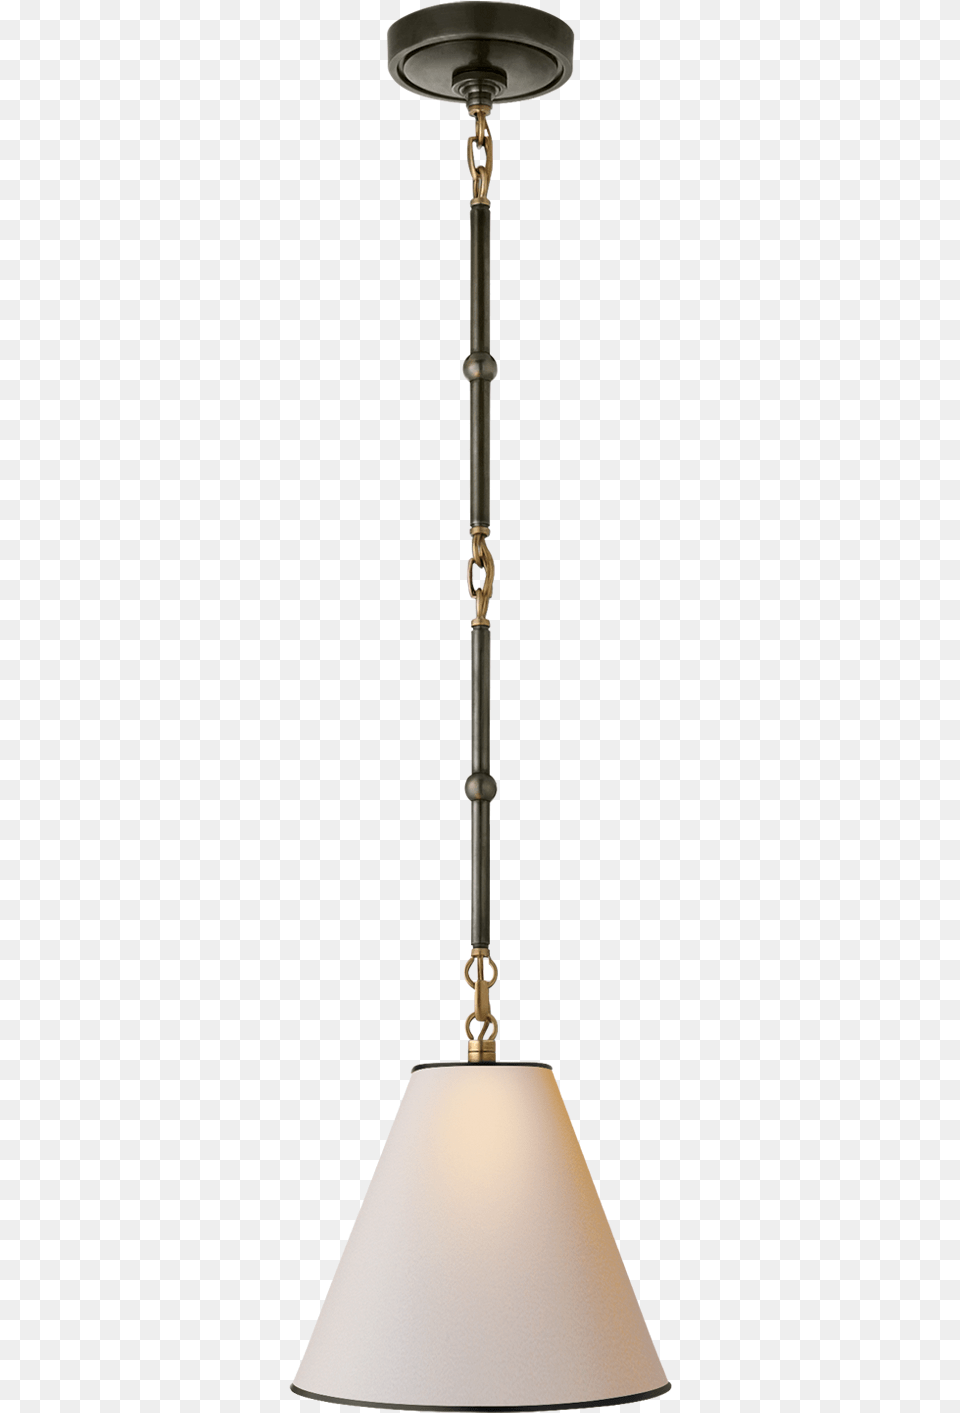 Ceiling, Lamp, Lampshade Png Image